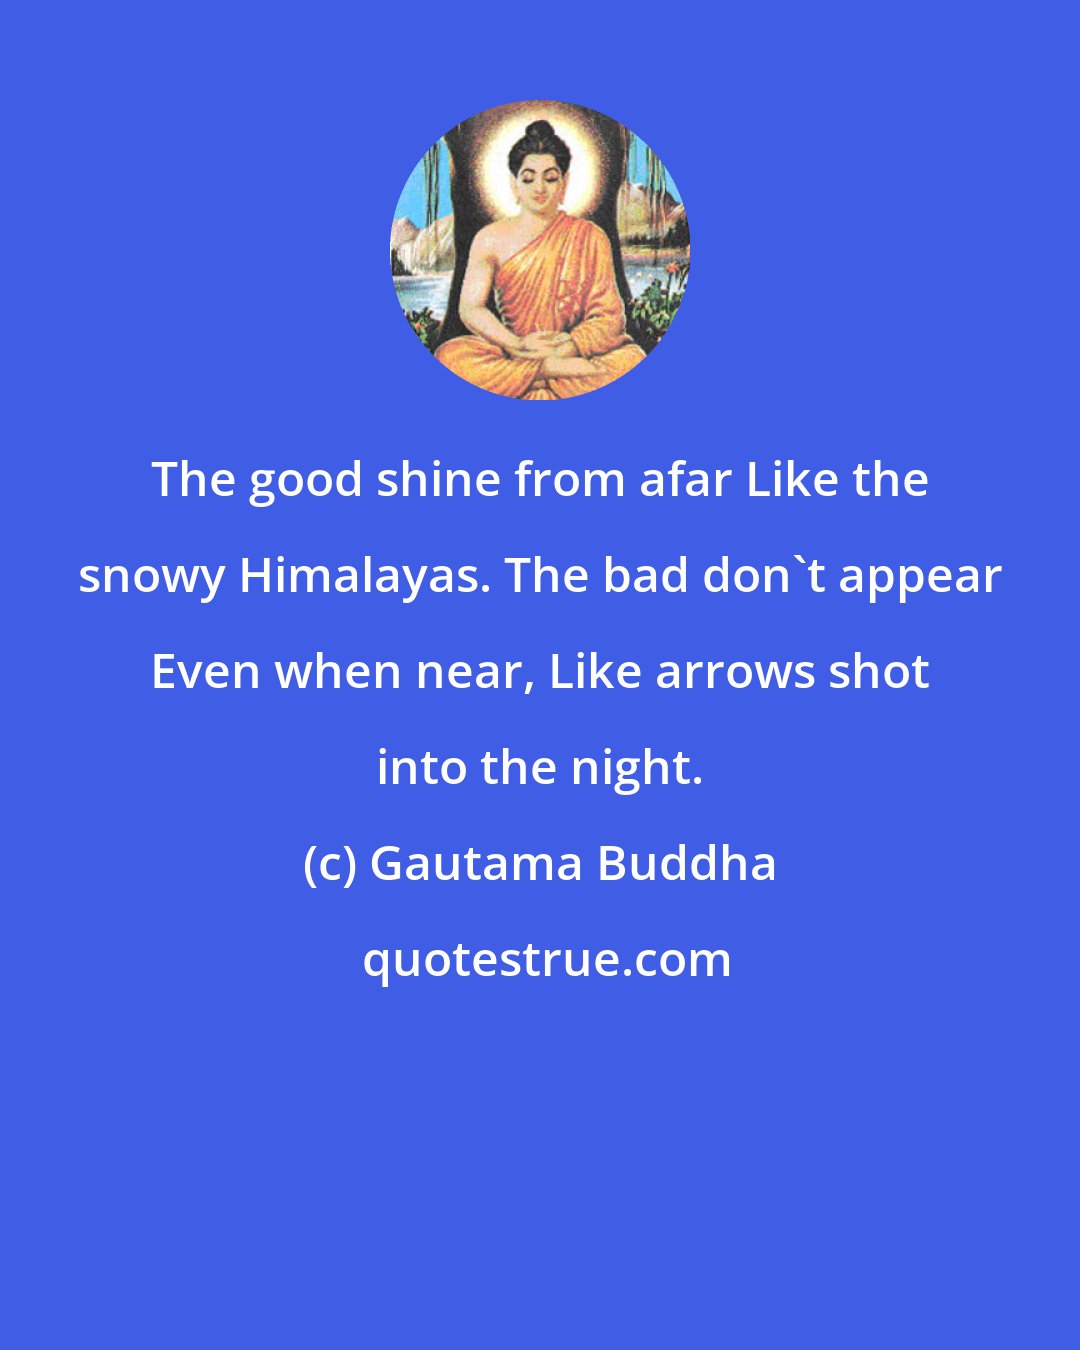 Gautama Buddha: The good shine from afar Like the snowy Himalayas. The bad don't appear Even when near, Like arrows shot into the night.